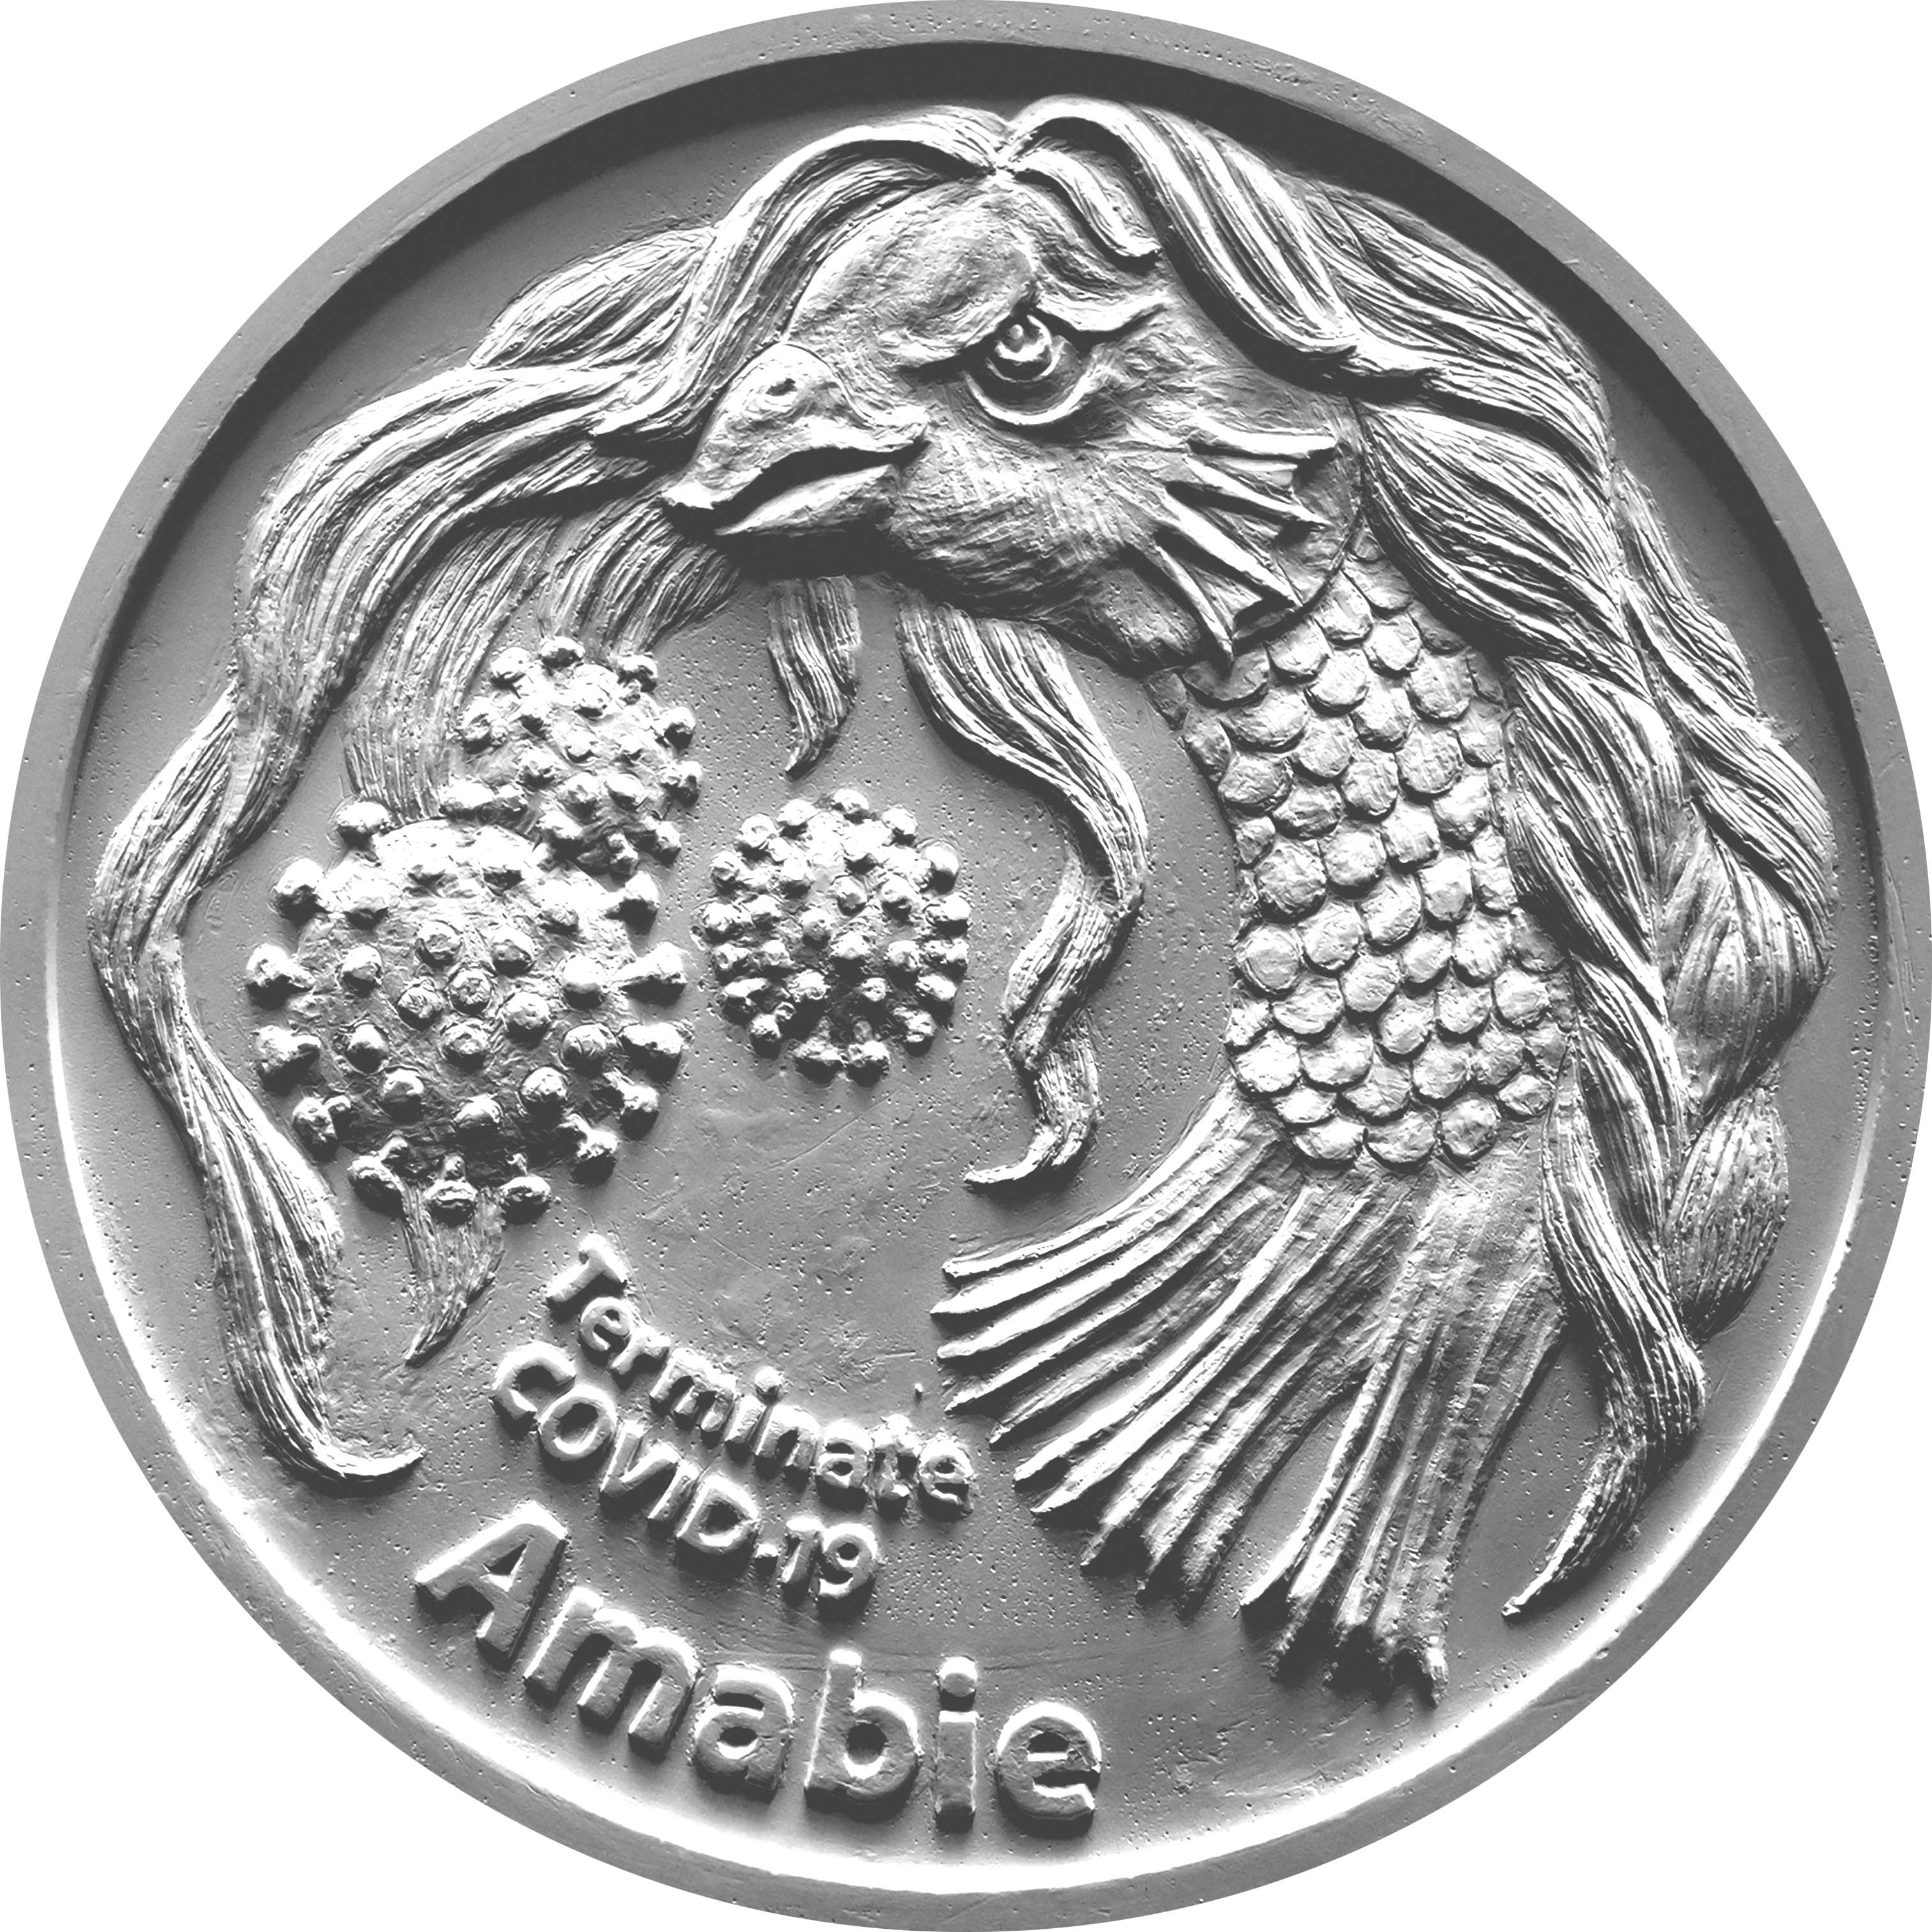 ICDC2020メダル（銀メダル）表面の画像